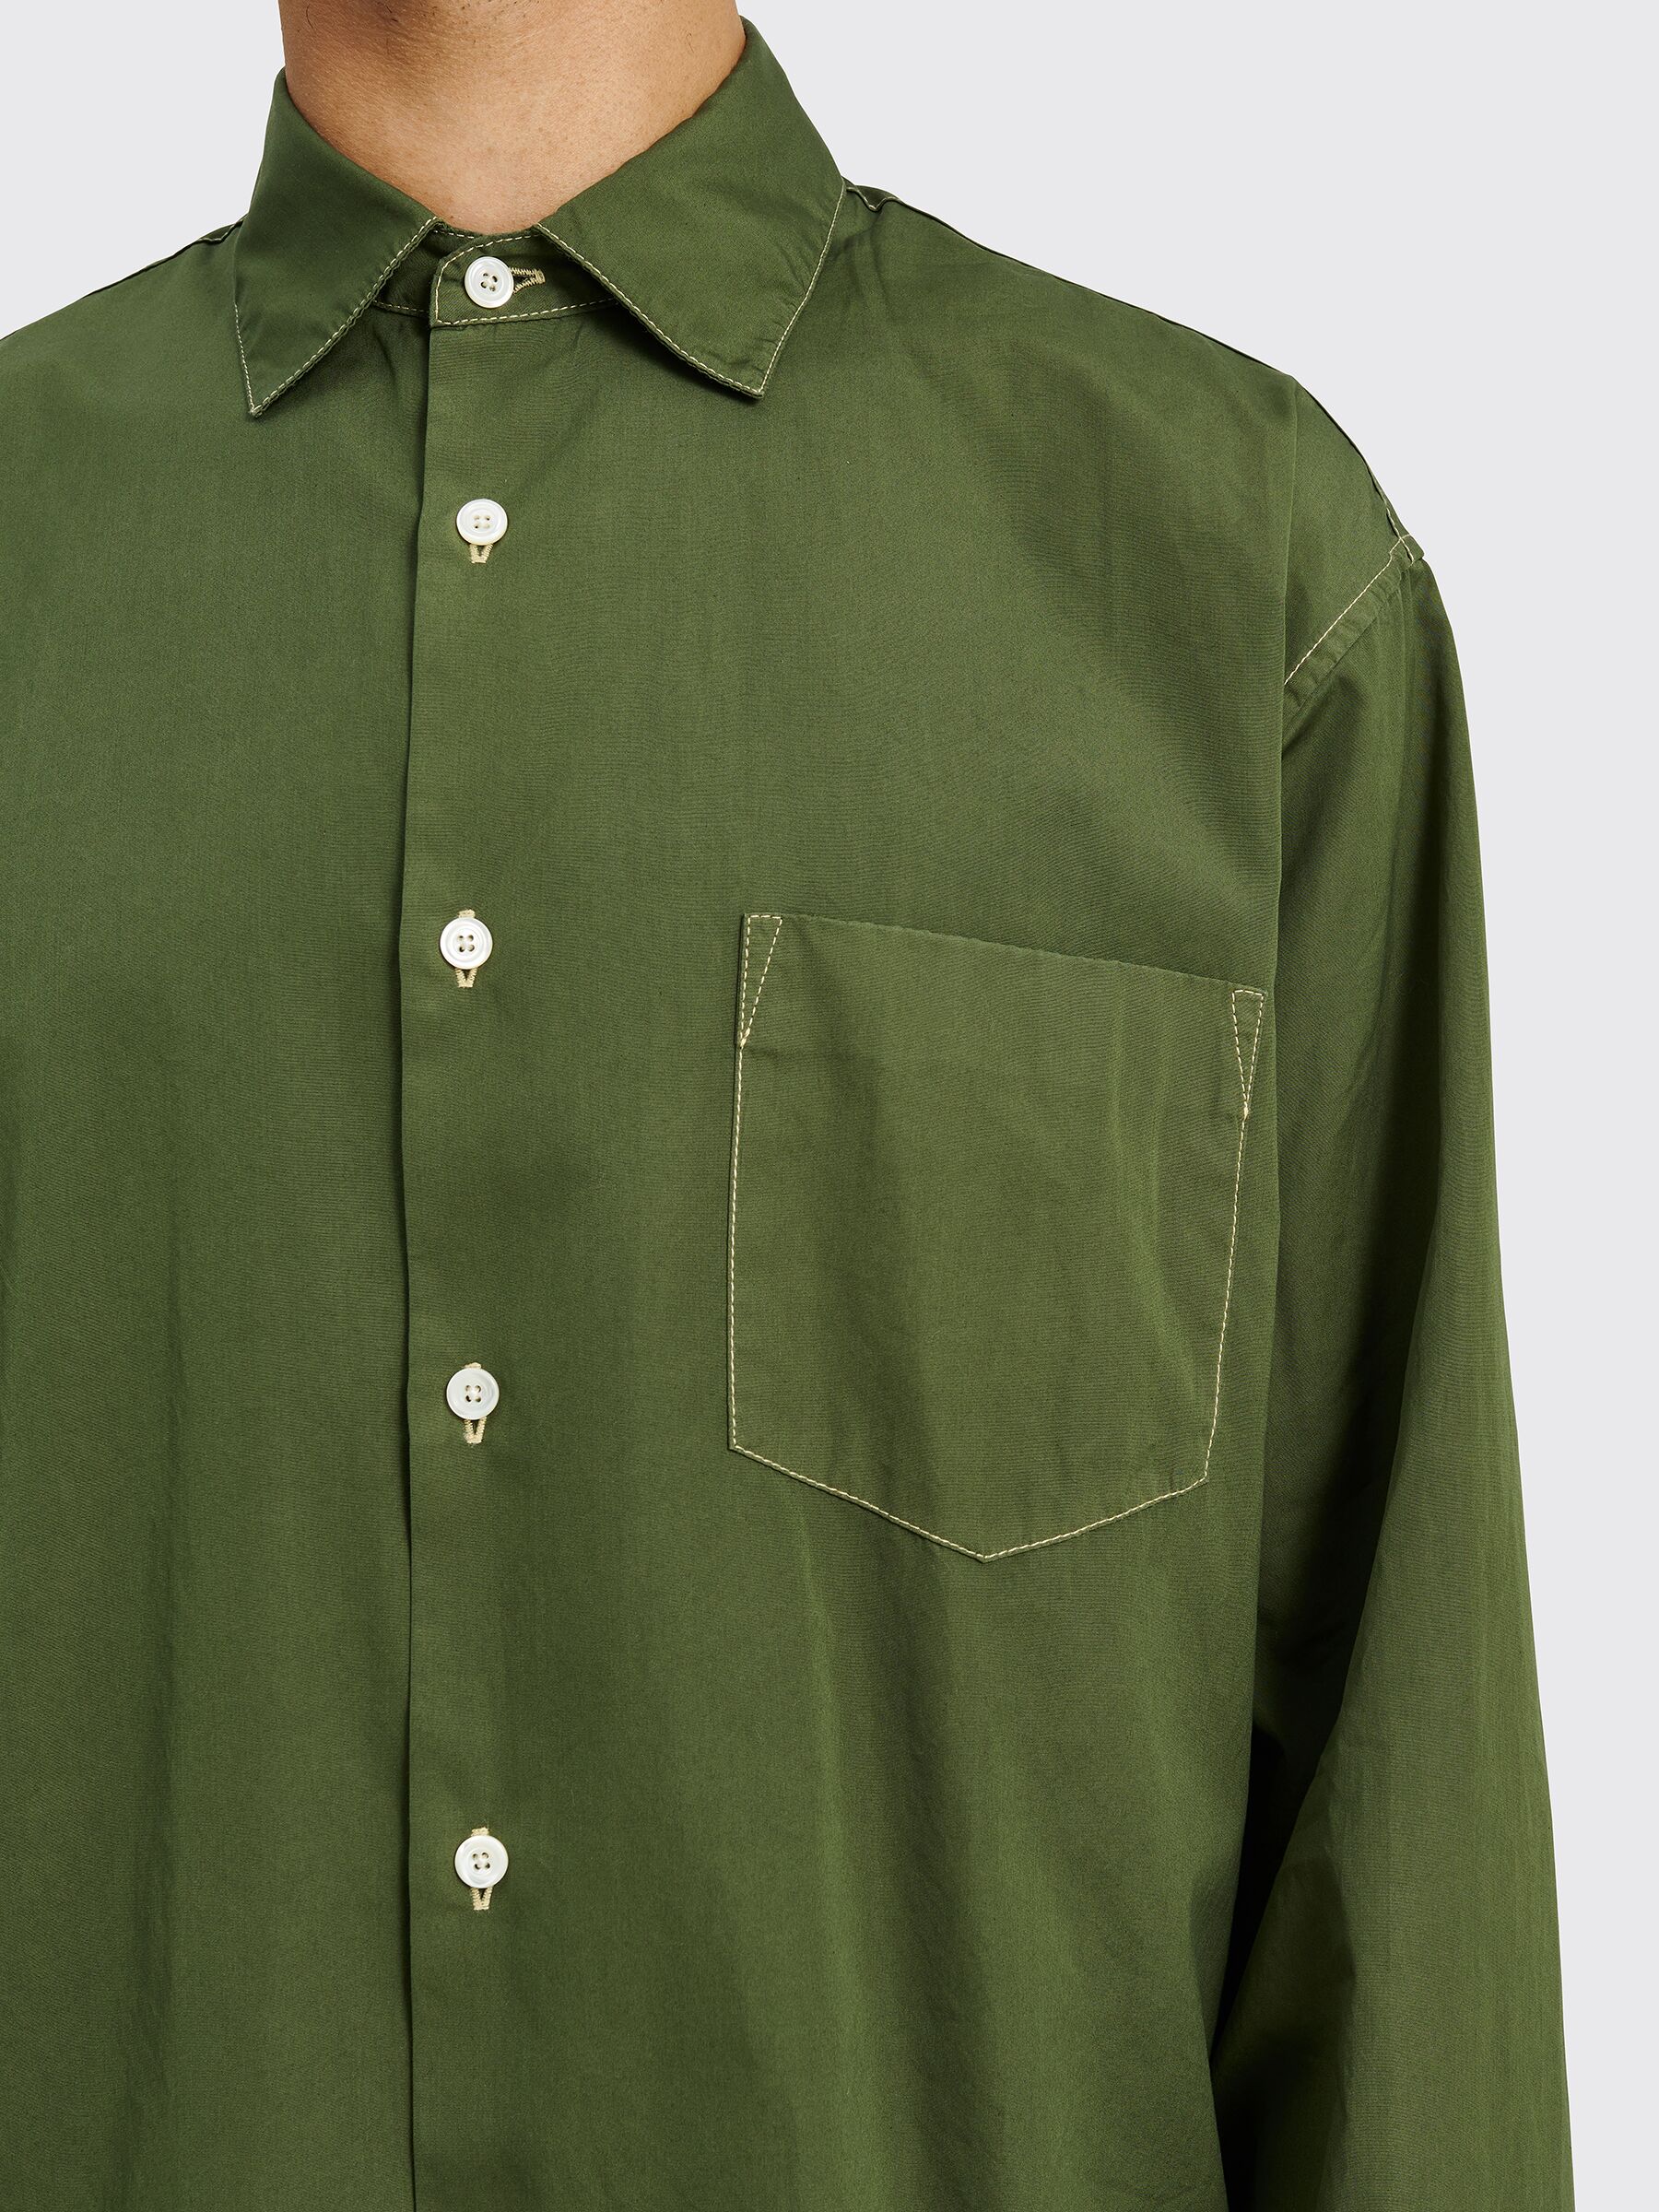 Très Bien - TRÈS BIEN everywear GD New Wave Shirt Dark Green